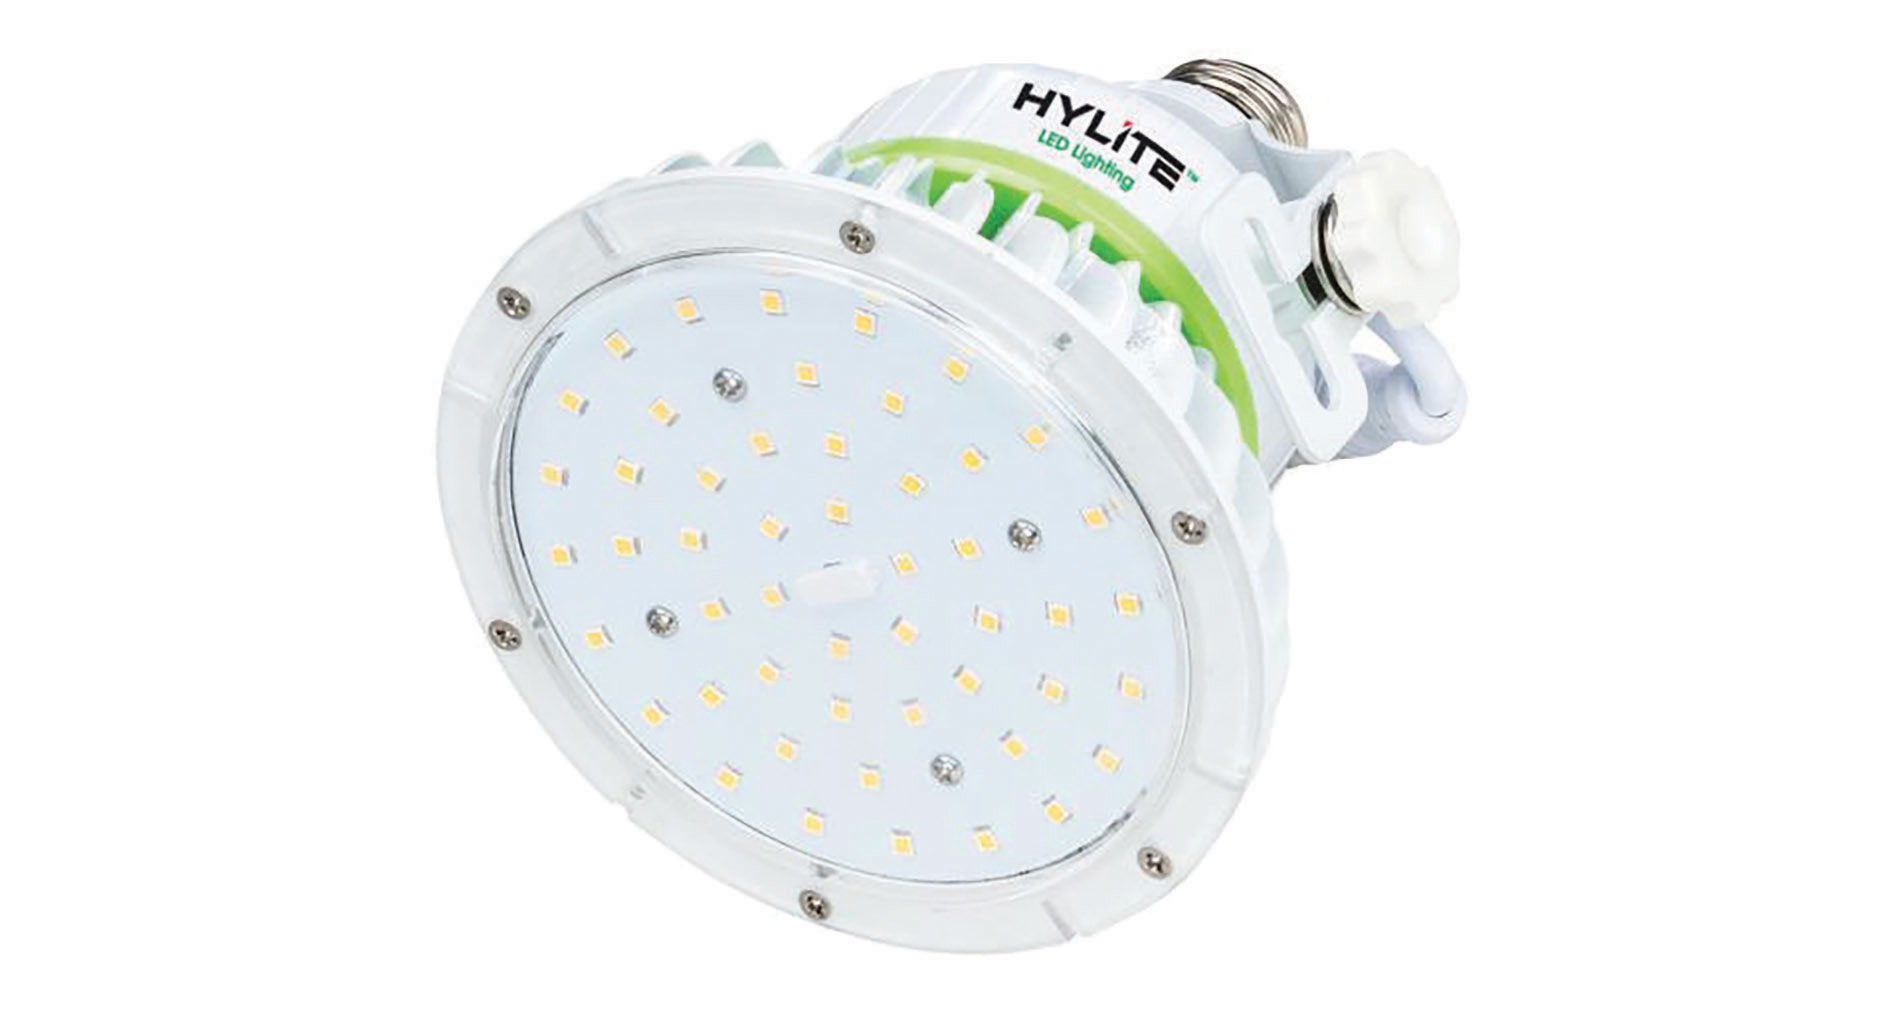 Hylite's LED Lotus Lamp